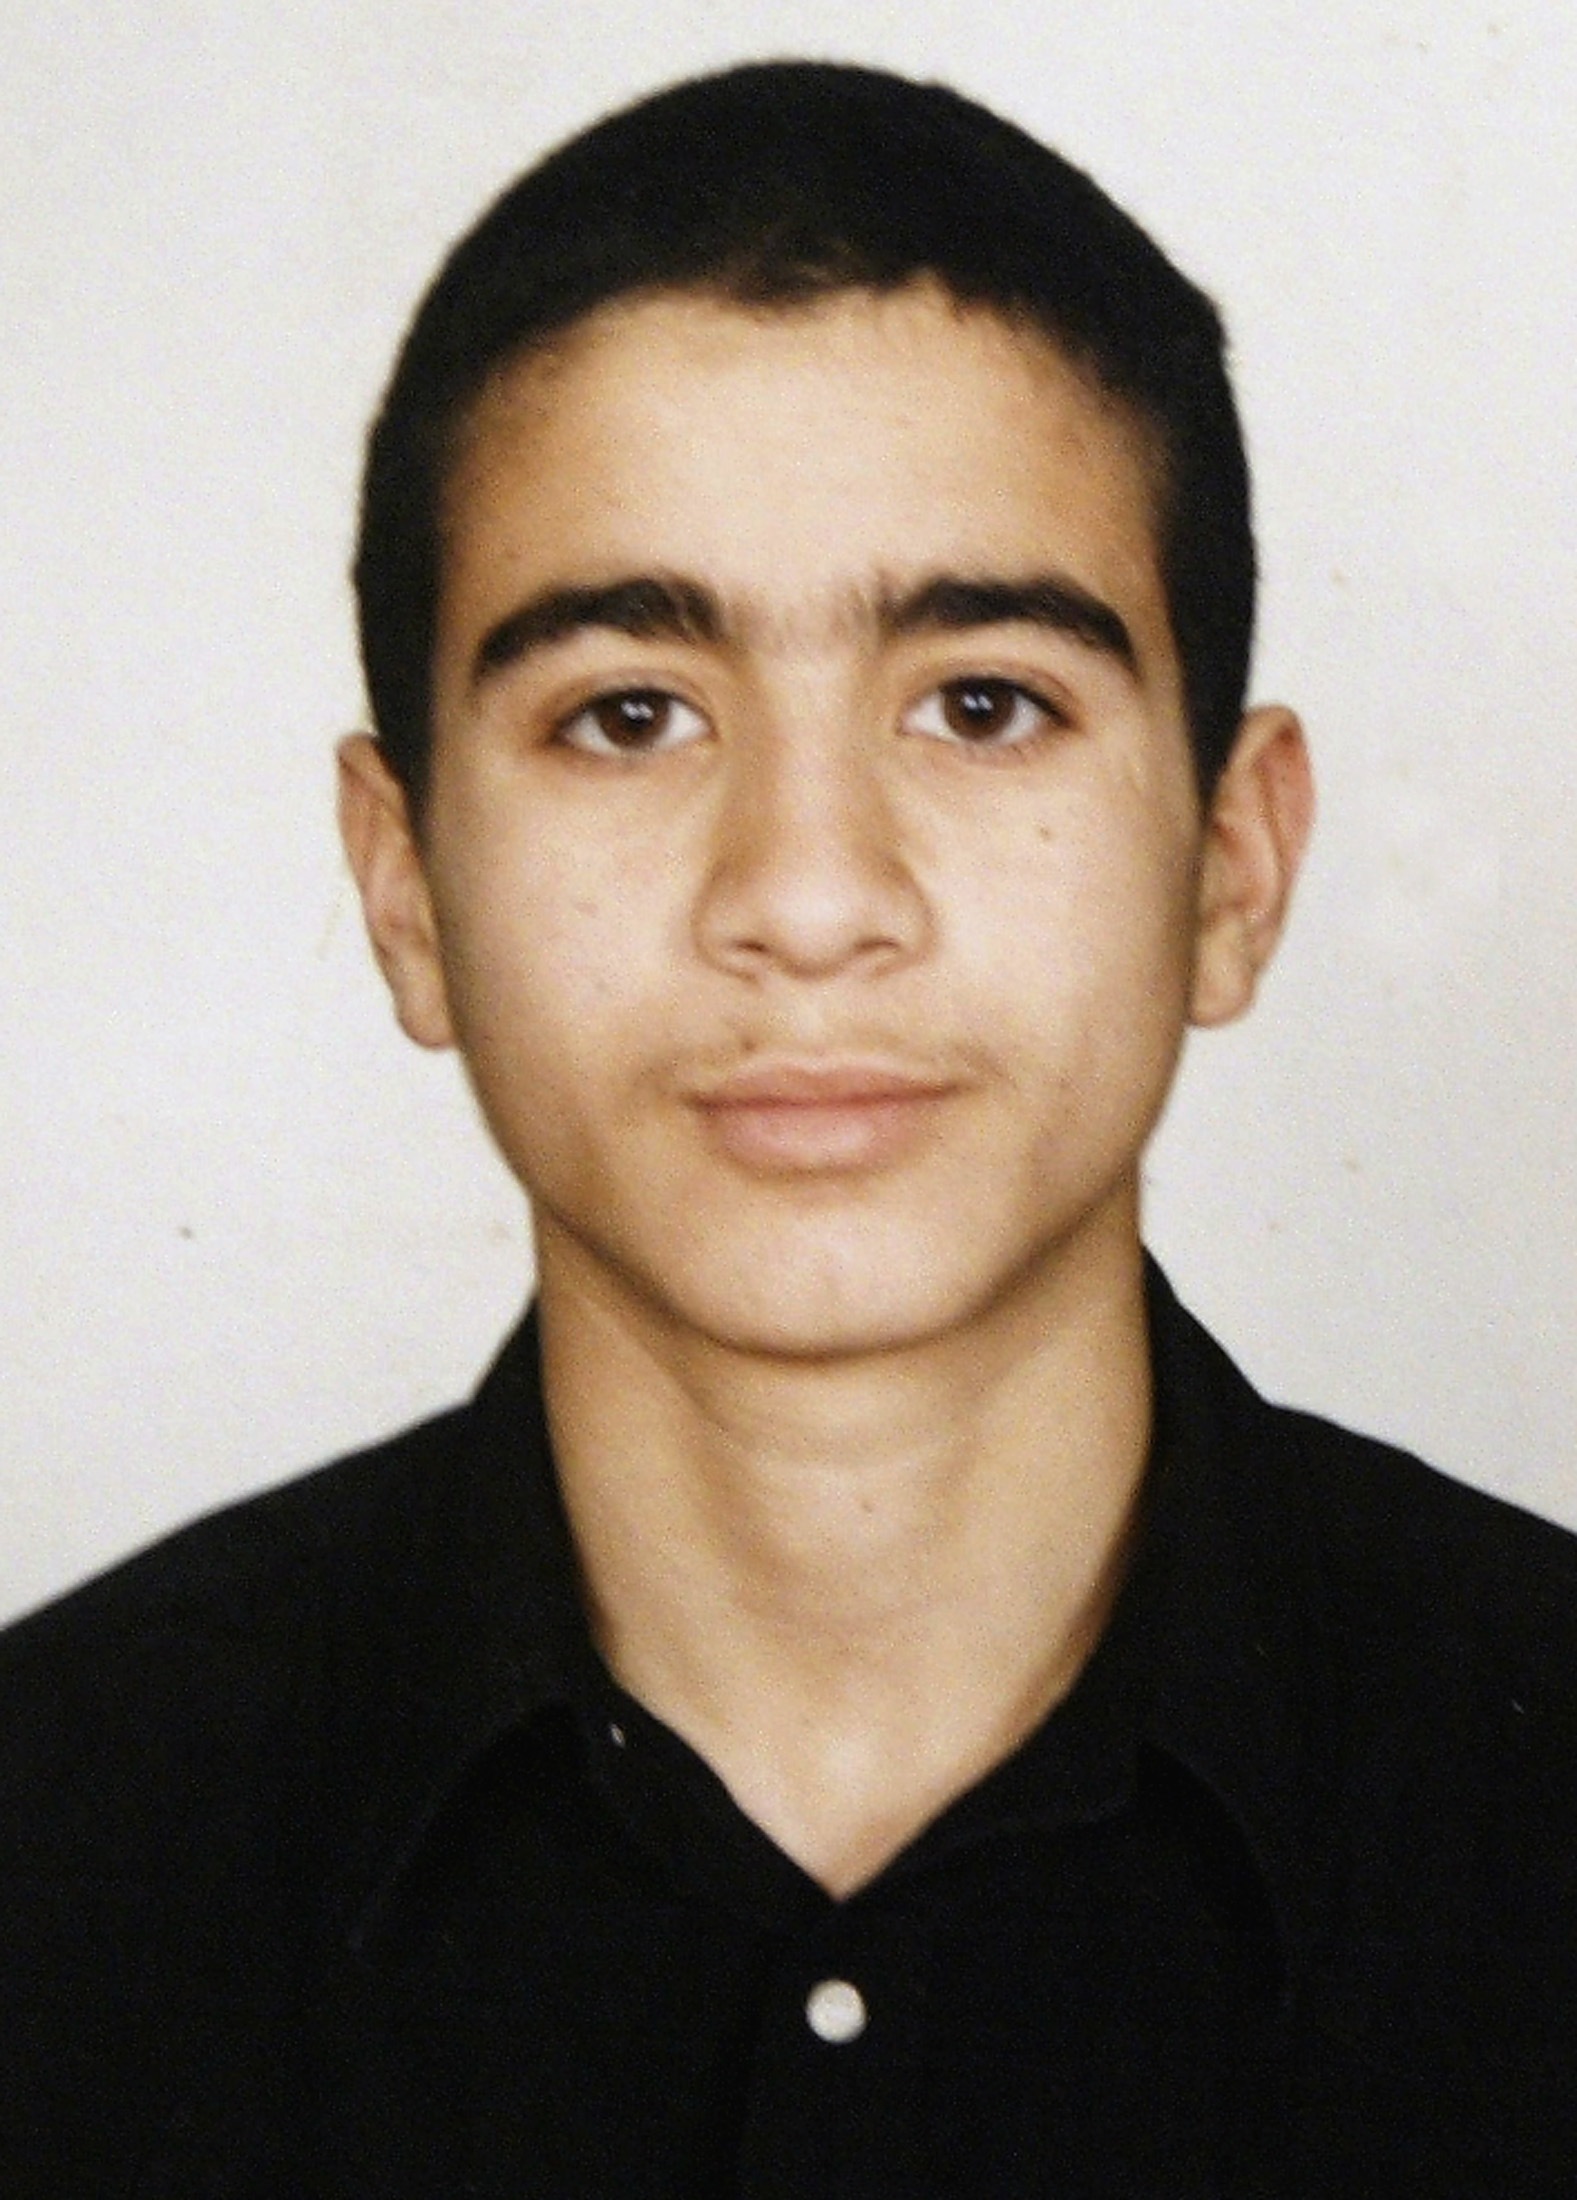 Omar-Khadr-Gitmo-Guantanamo-Bay-Child-Soldier